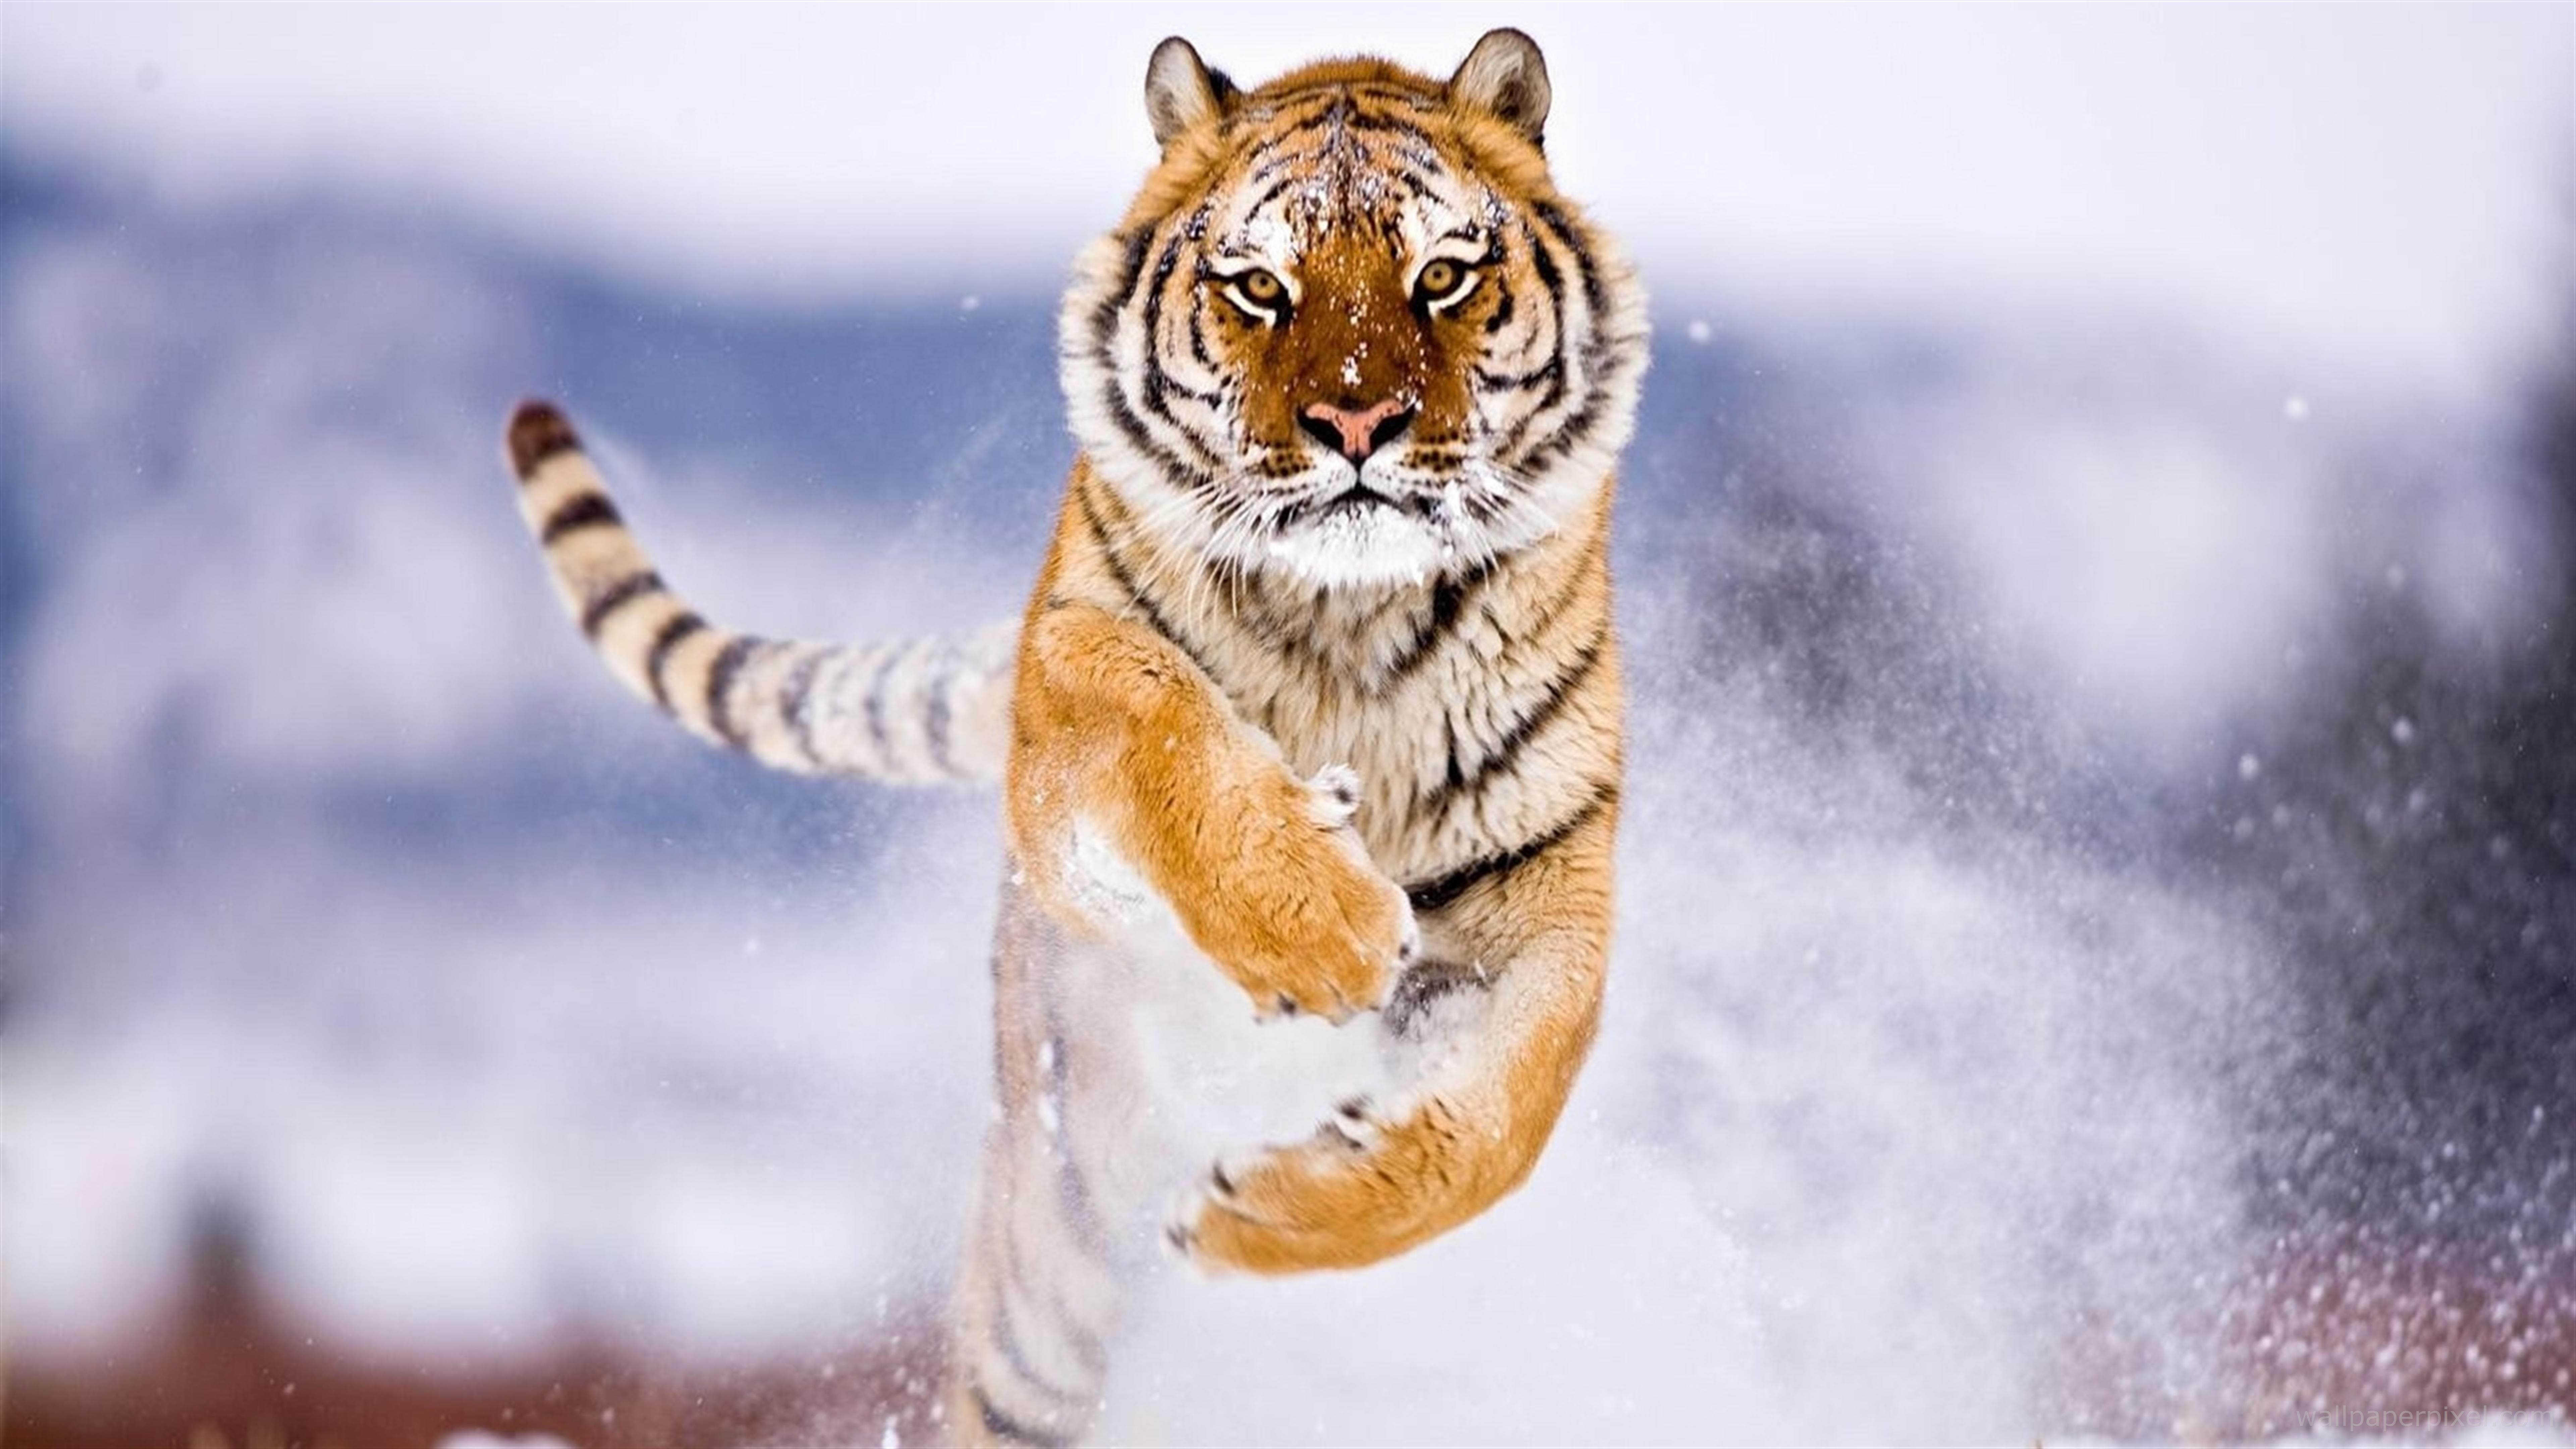 Tiger In Snow 8k HD 4k Wallpaper, Image, Background